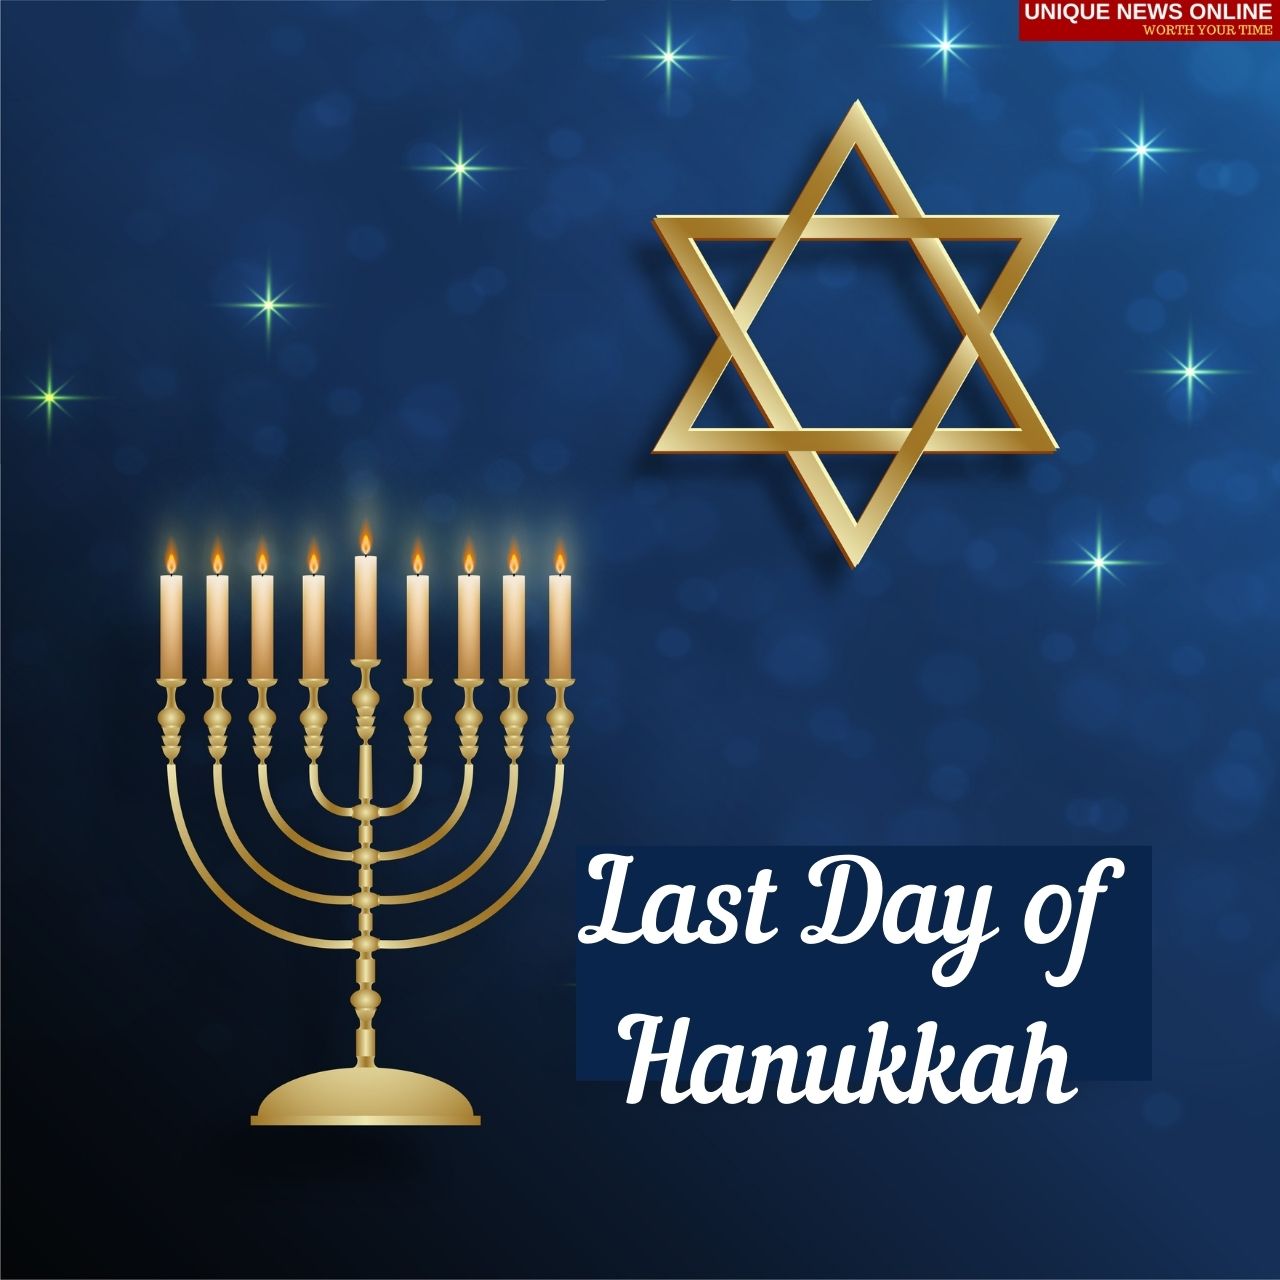 Last Day of Hanukkah 2021 Prayers, Greetings, Blessings, Sayings